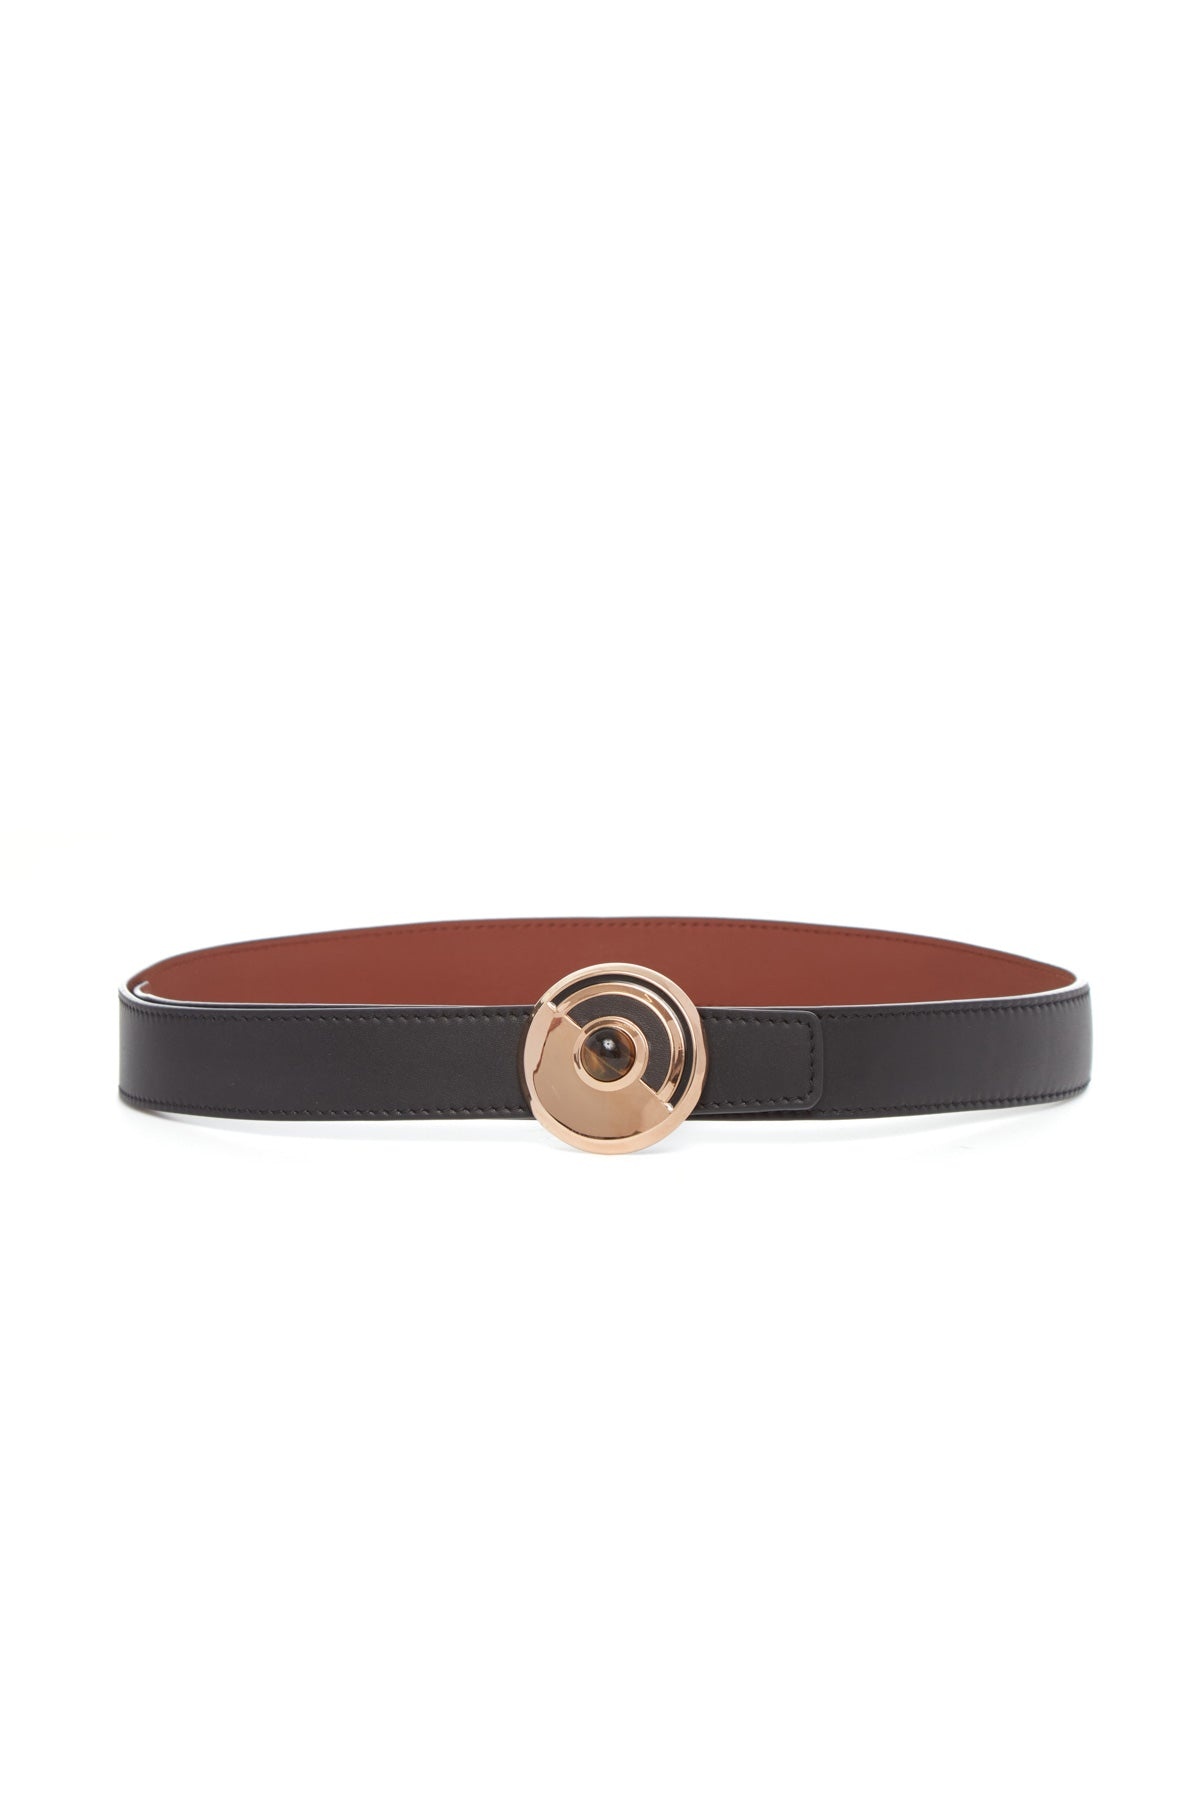 Moya Reversible Small Belt in Black Leather - 1